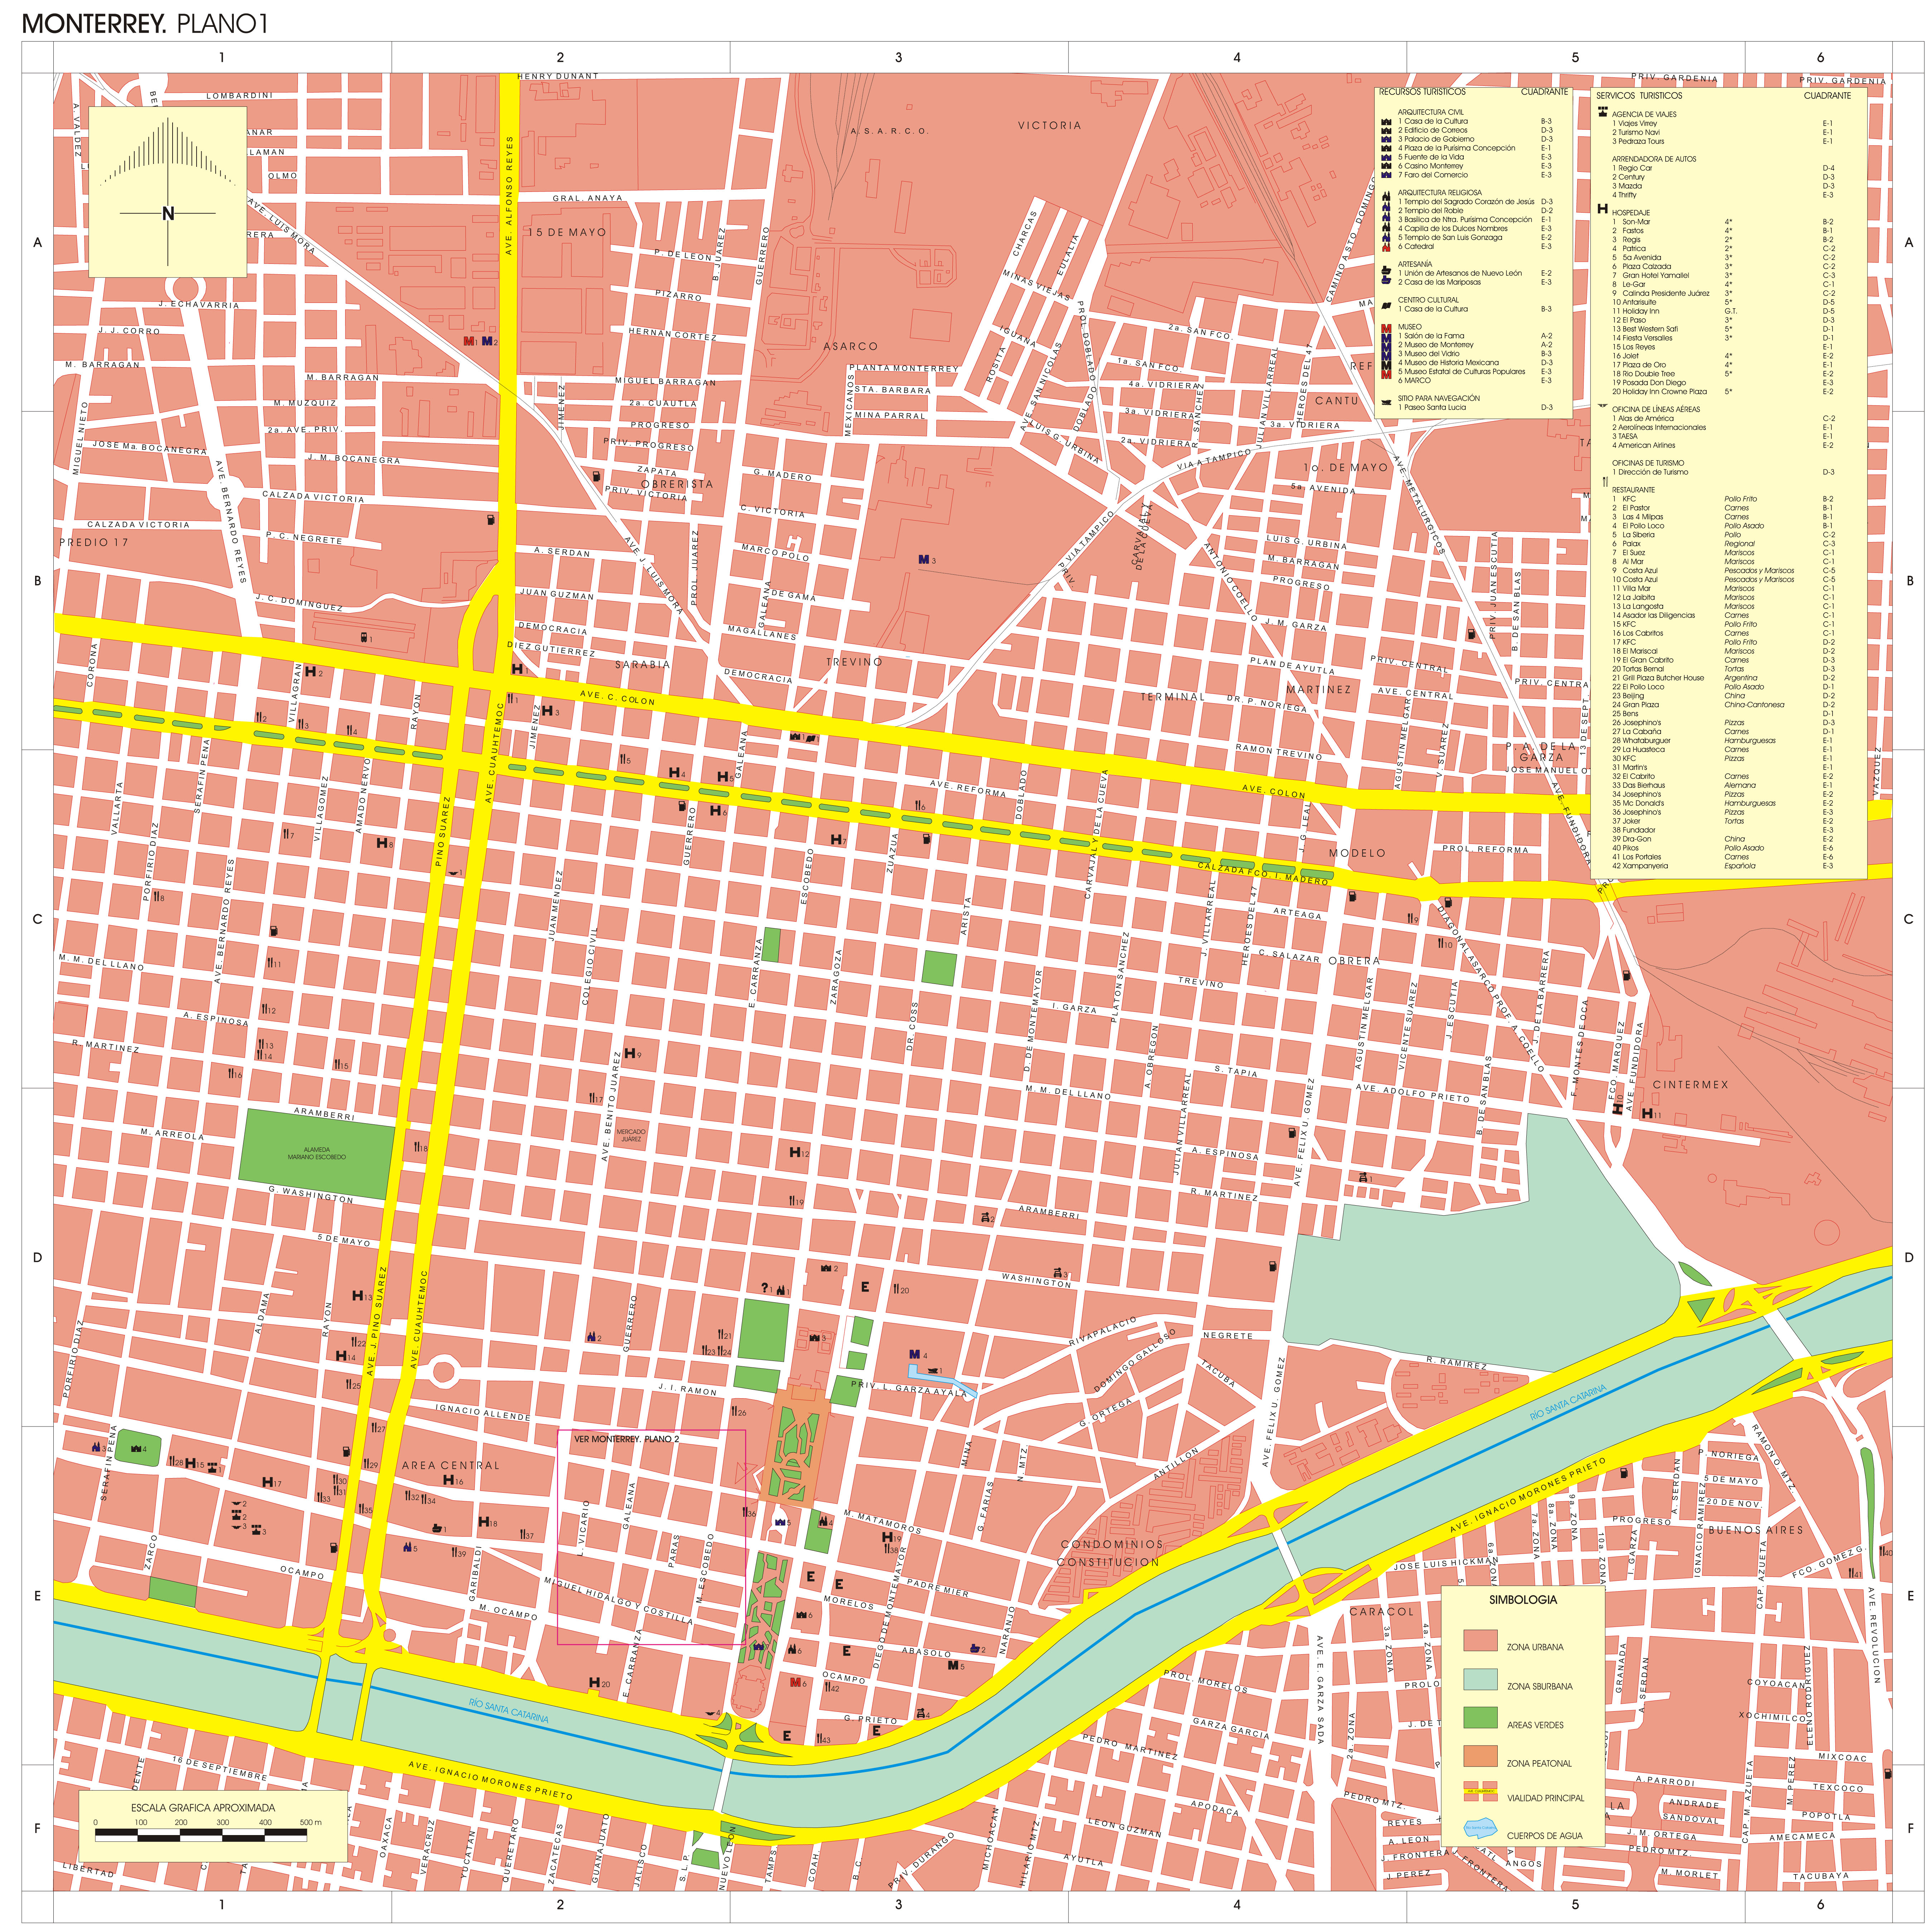 Map of Monterrey Full size Gifex